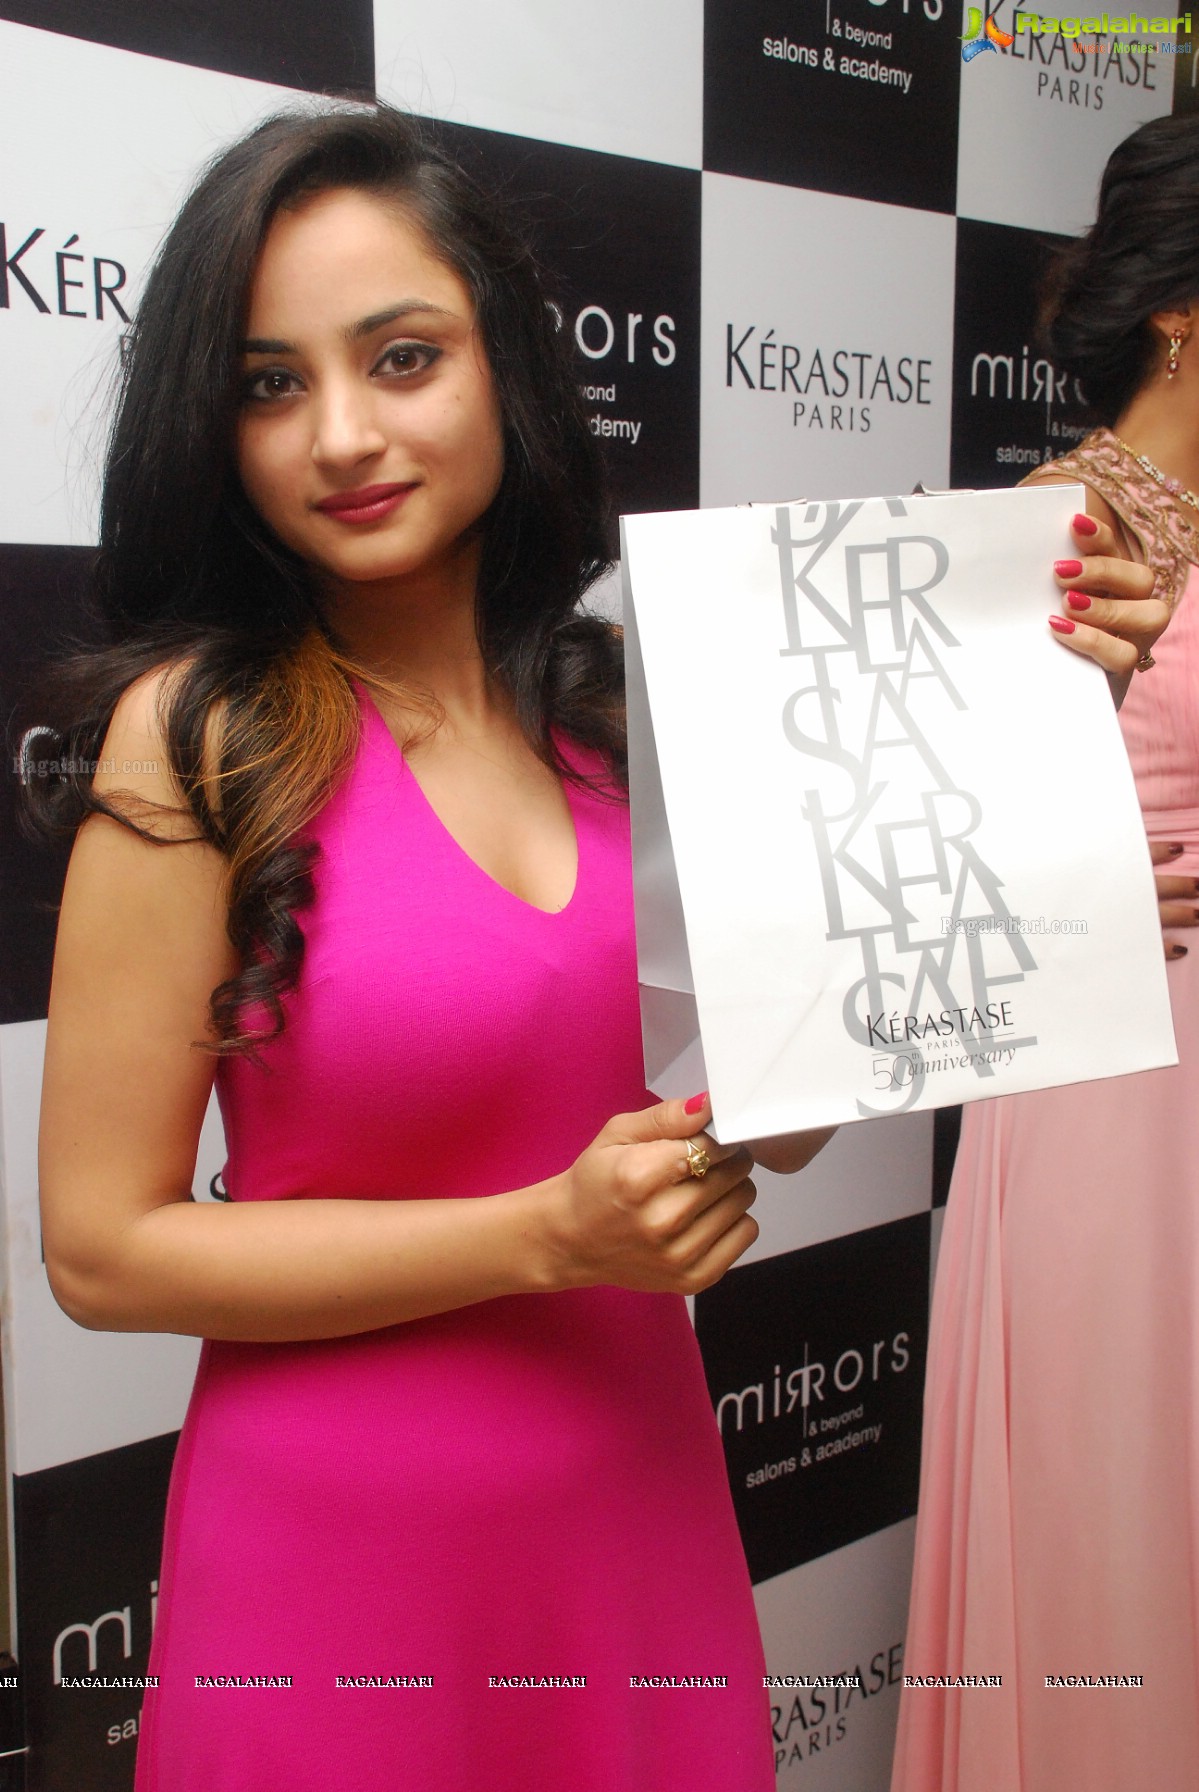 Kerastase Launch at Mirrors Spa and Salon, Hyderabad